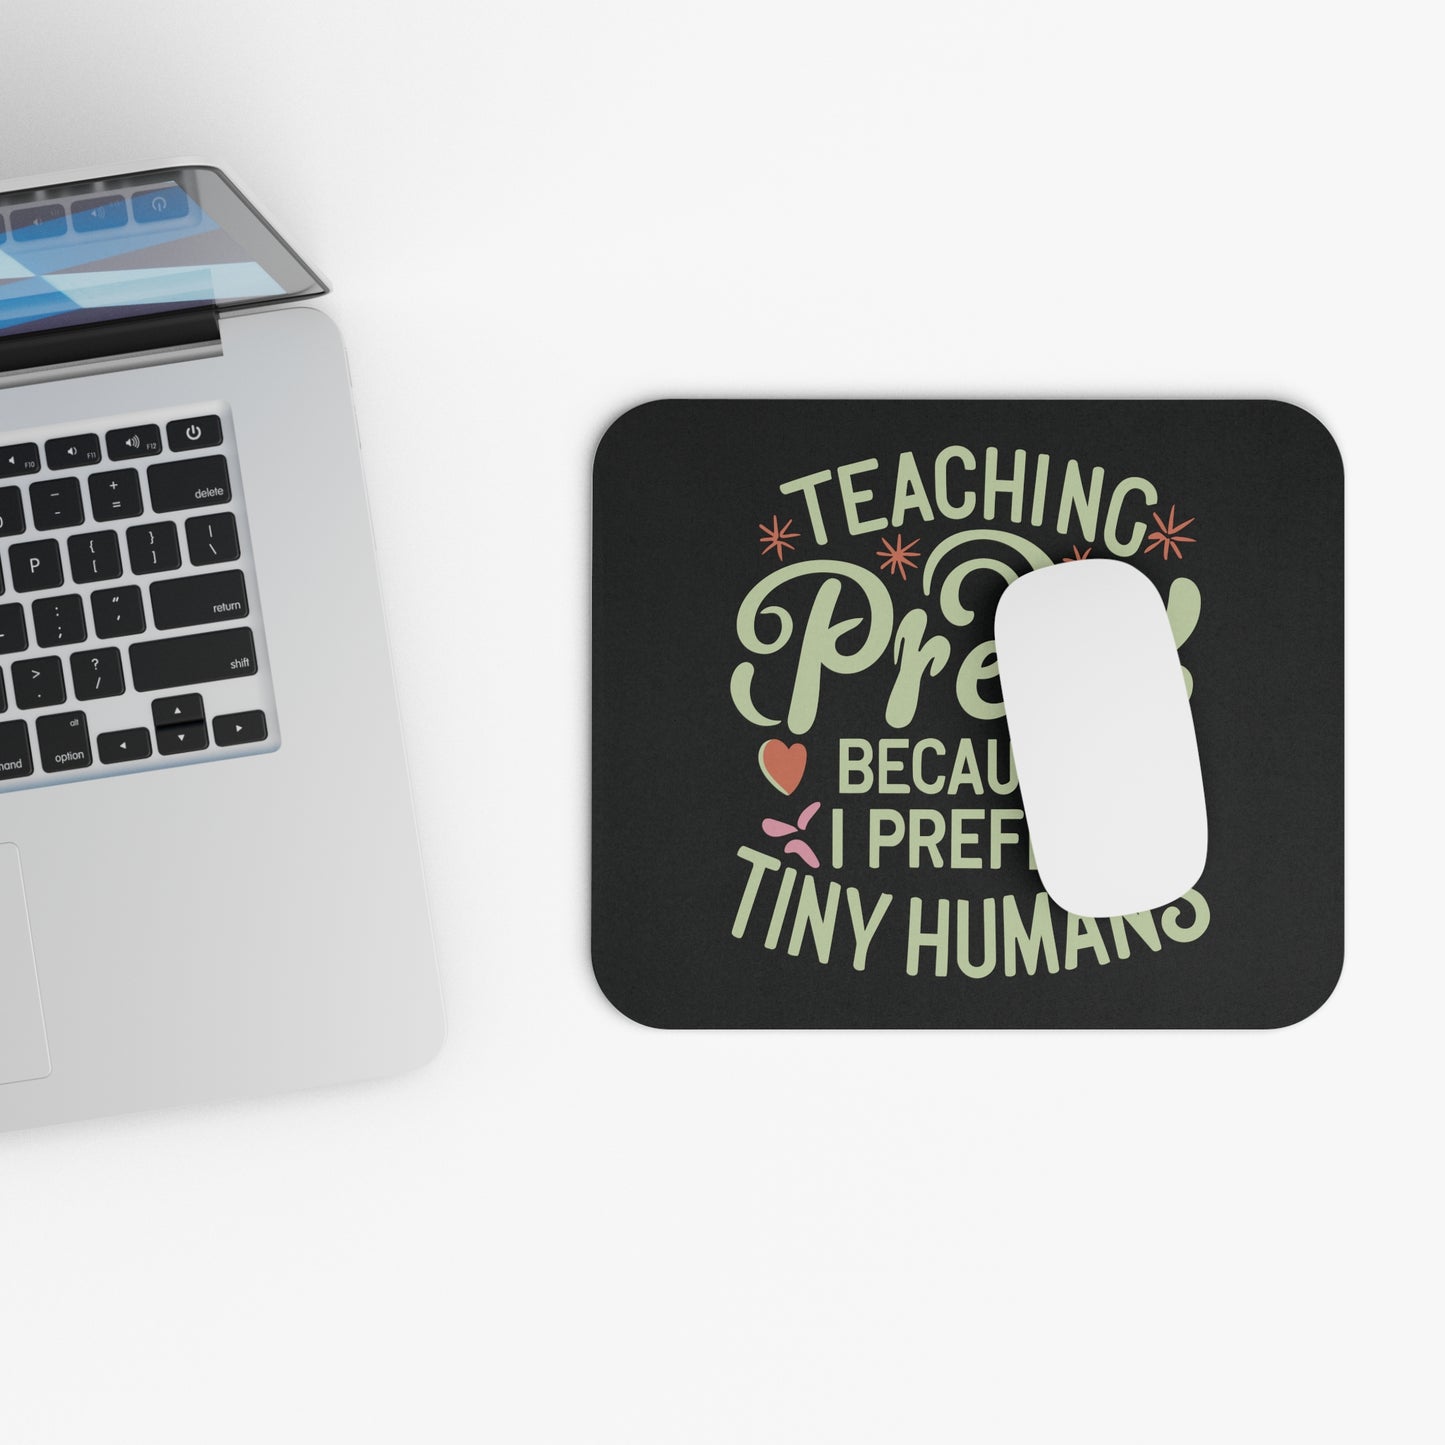 PreK Teacher Mouse Pad - "Teaching PreK Because I Prefer Tiny Humans"